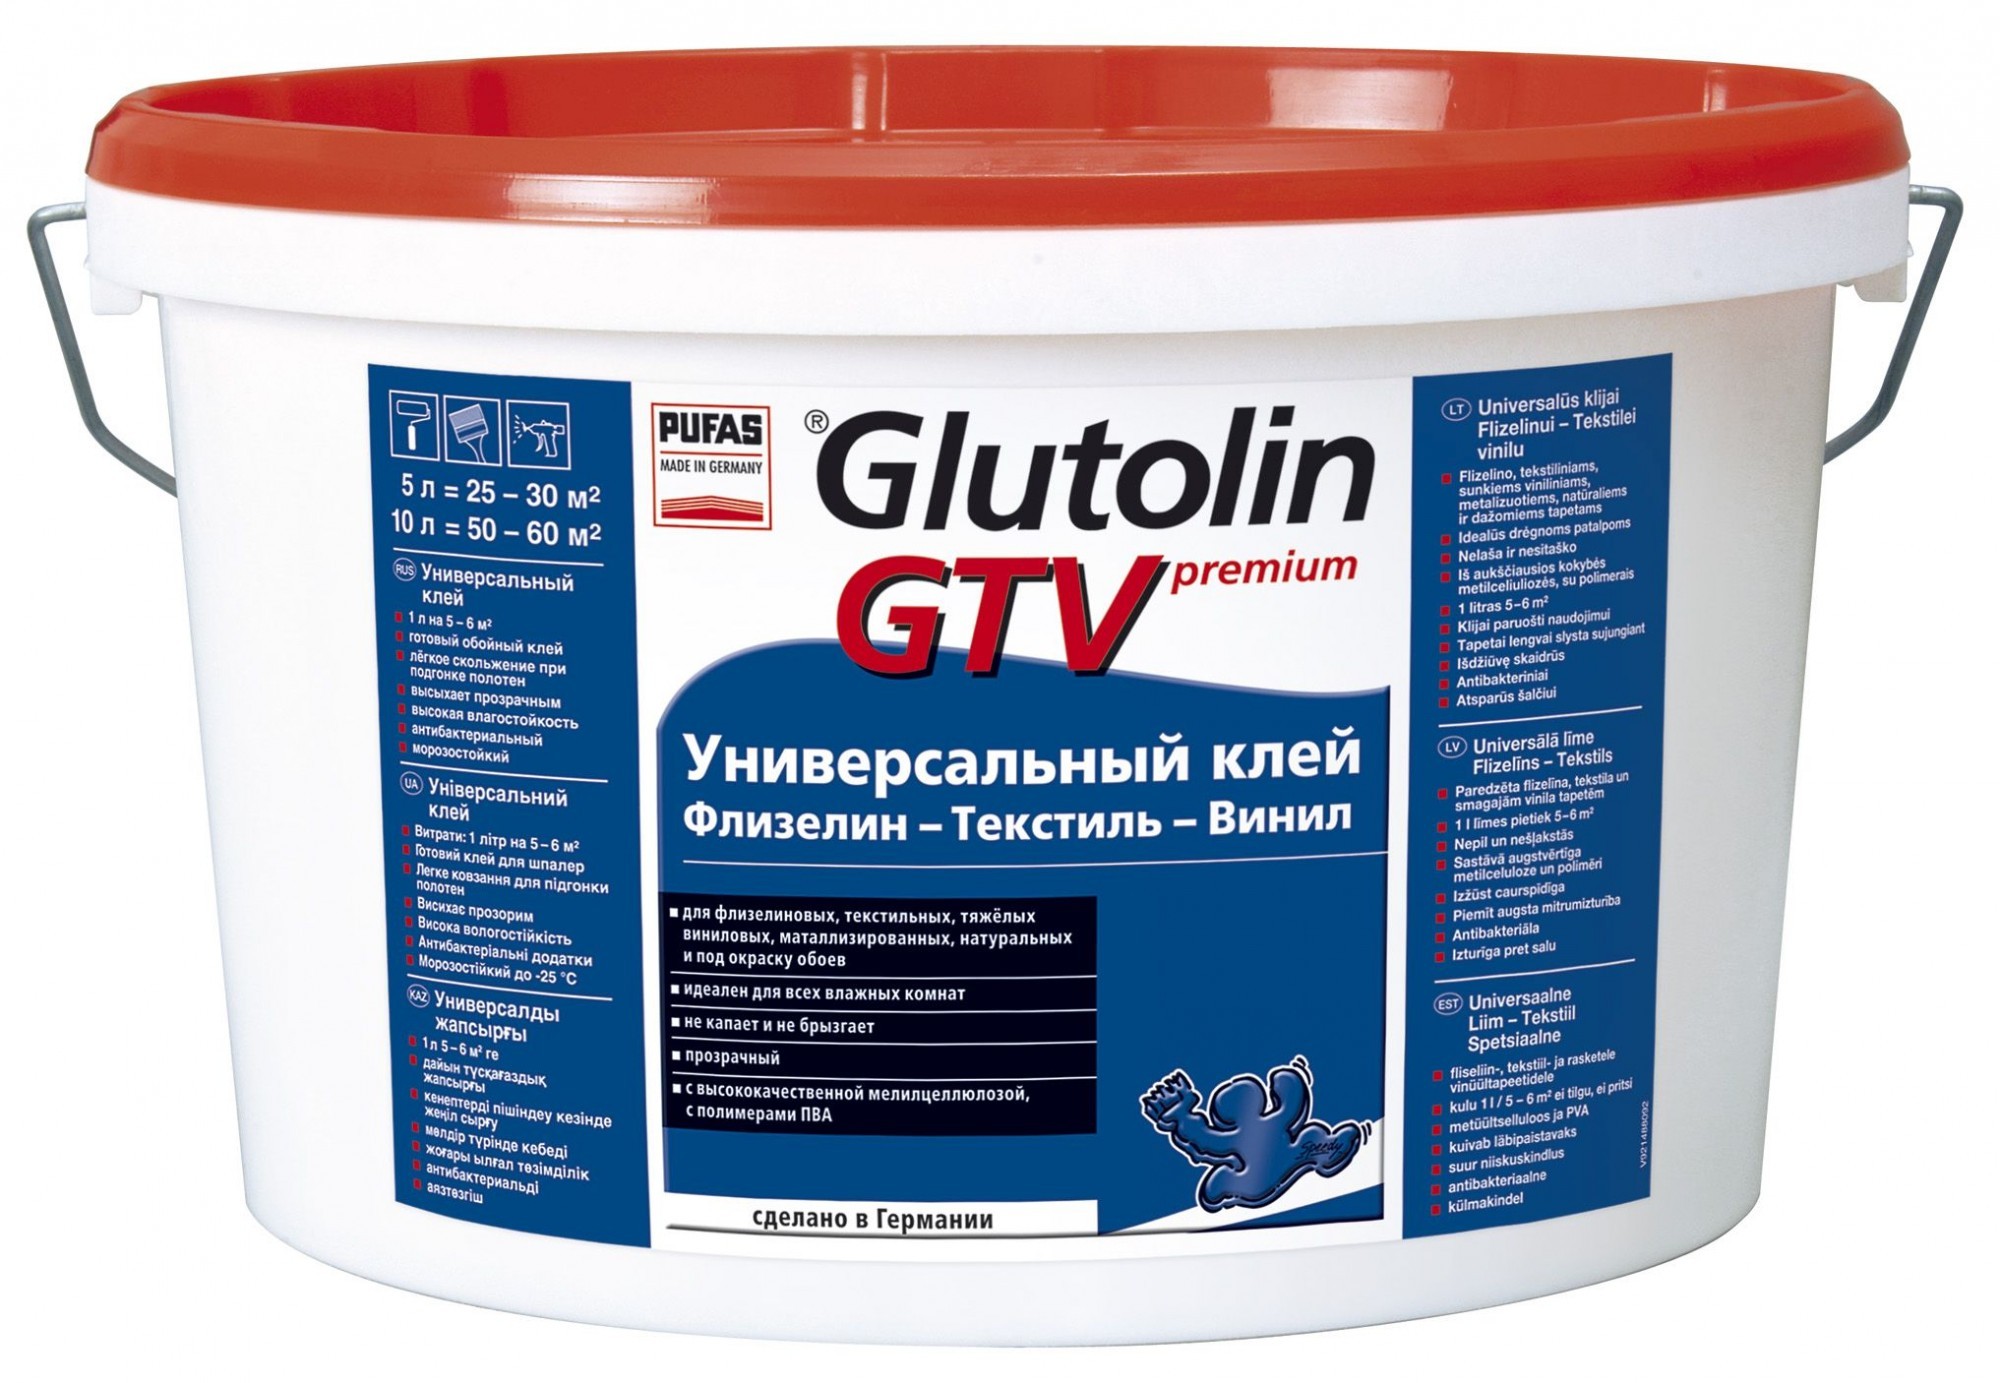 P_Glutolin_GTV_Preimium_5_l